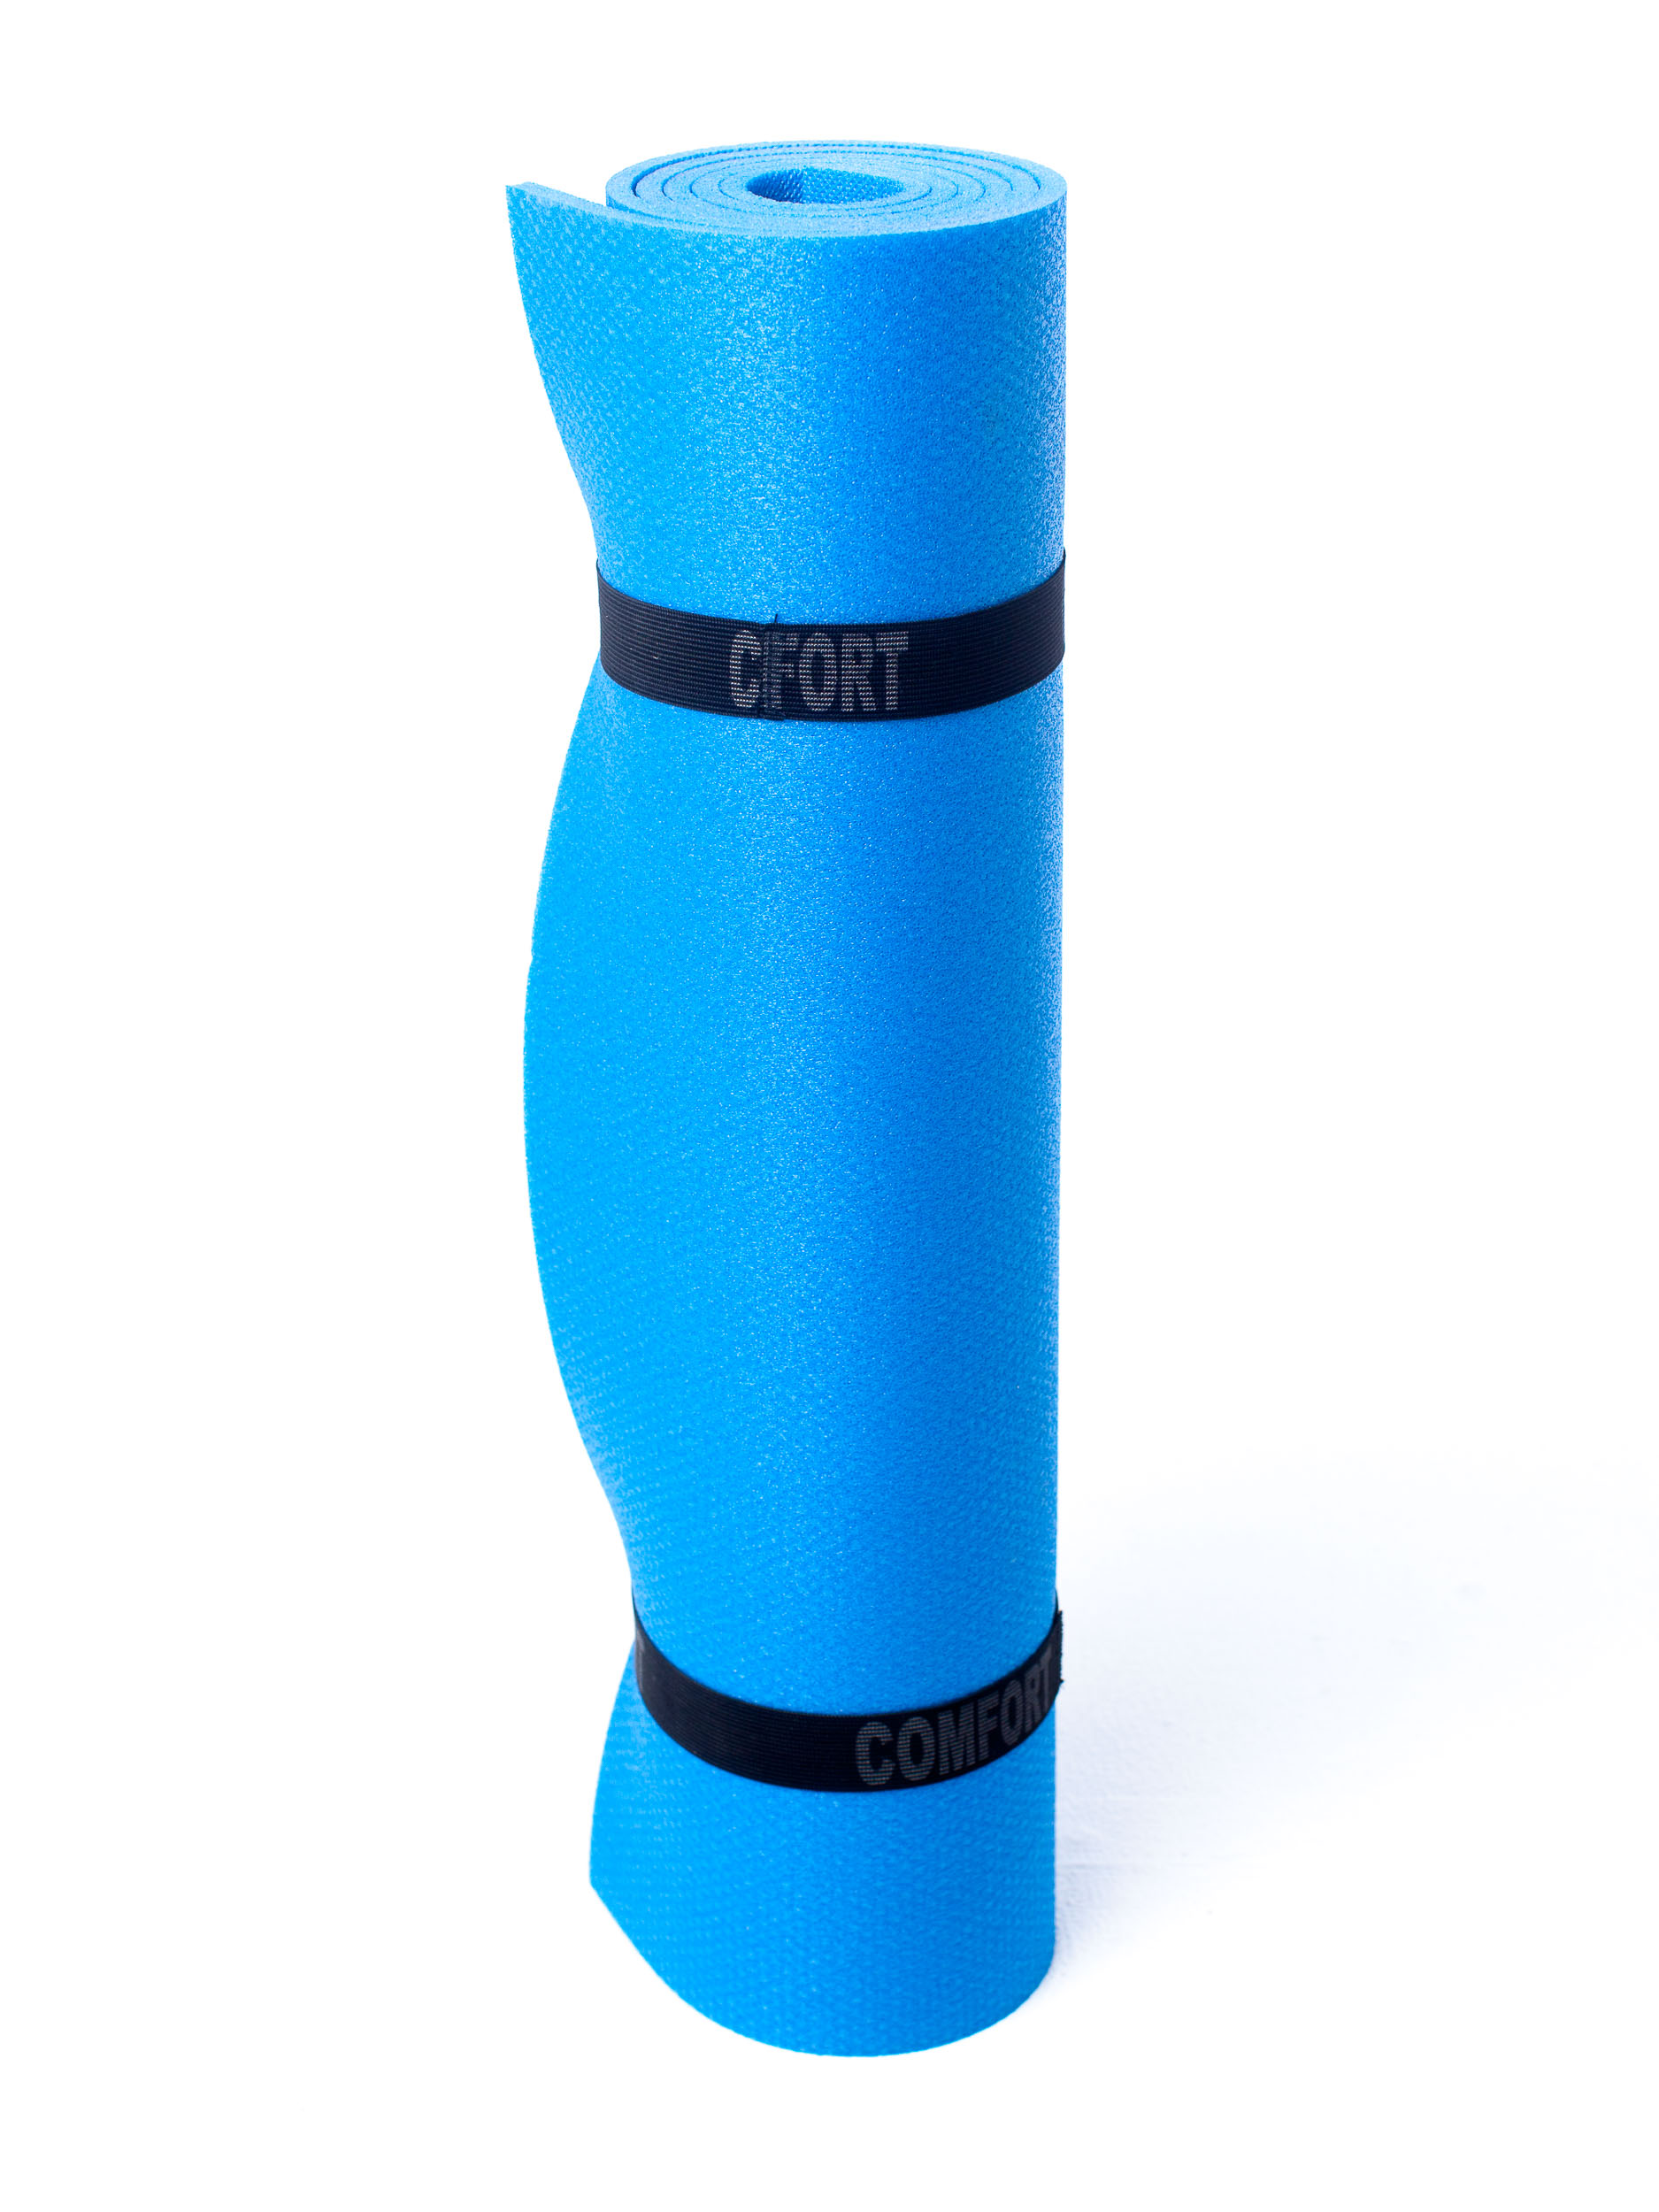 фото Коврик спортивно-туристический с рифлением comfort, цвет: синий, 1800x600x8 мм